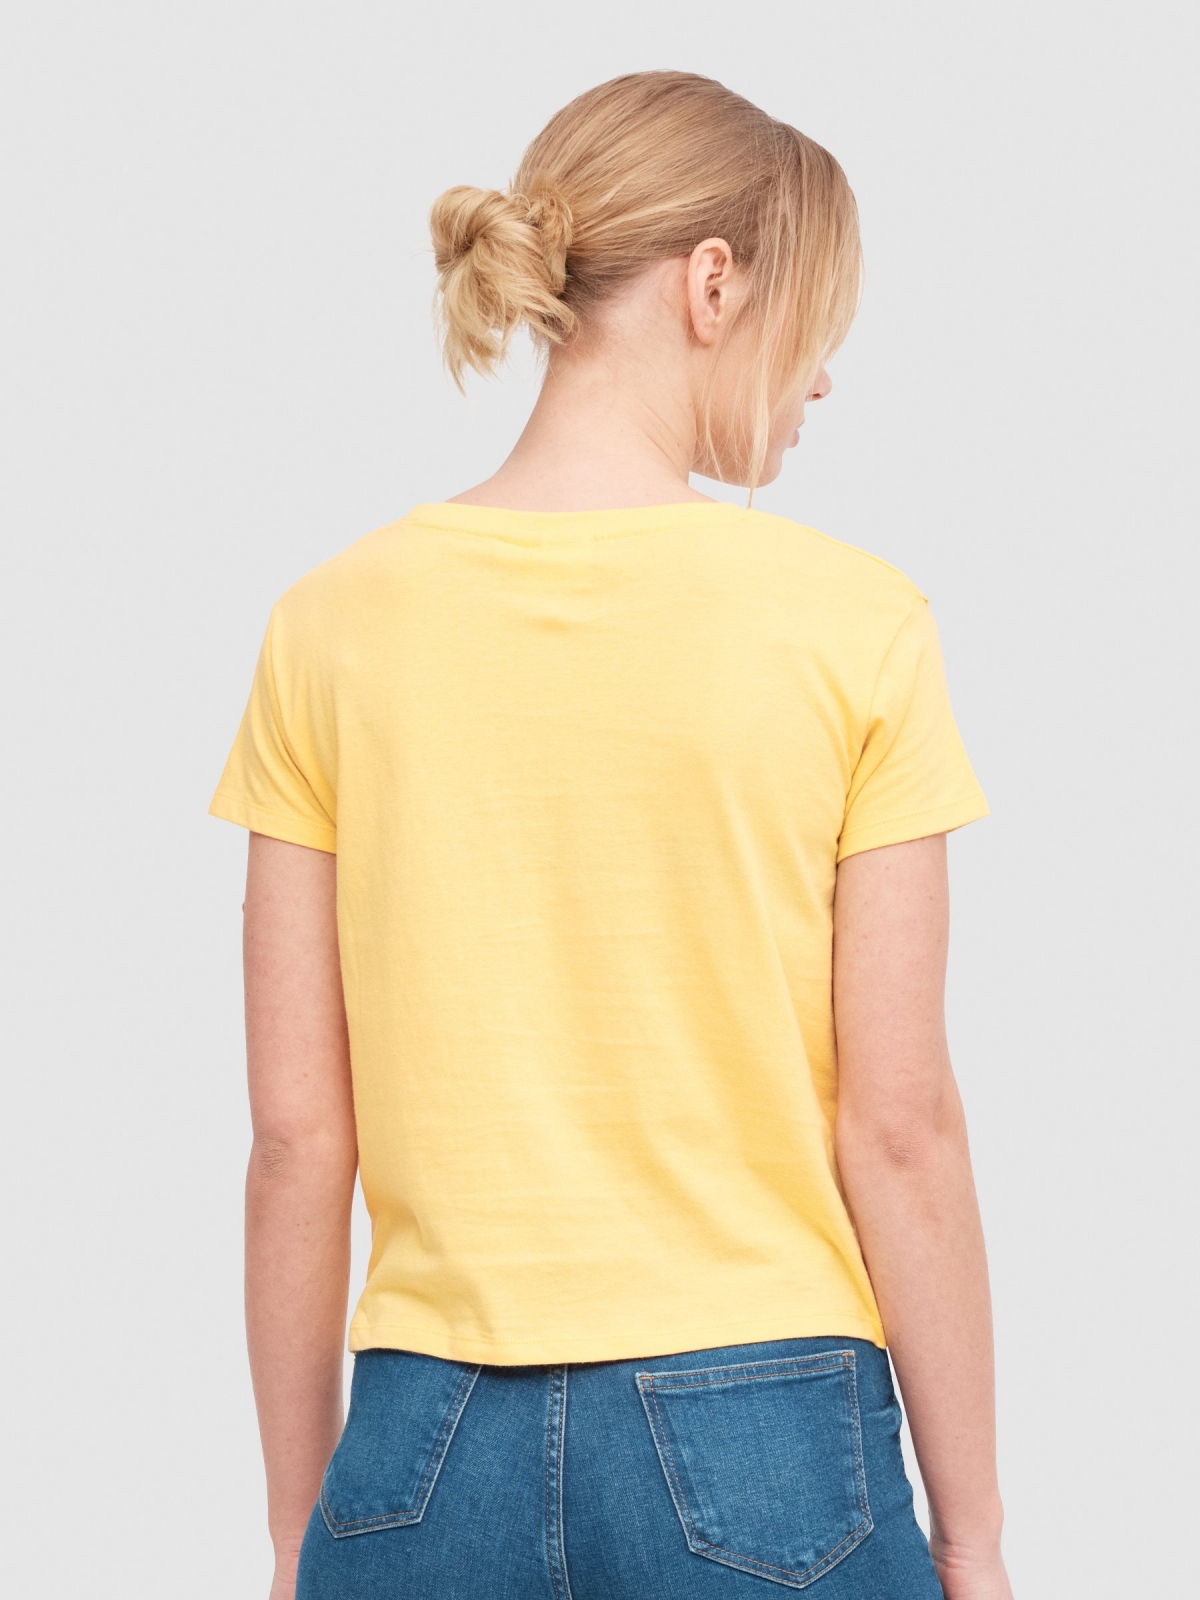 Camiseta licencia Stitch amarillo vista media trasera